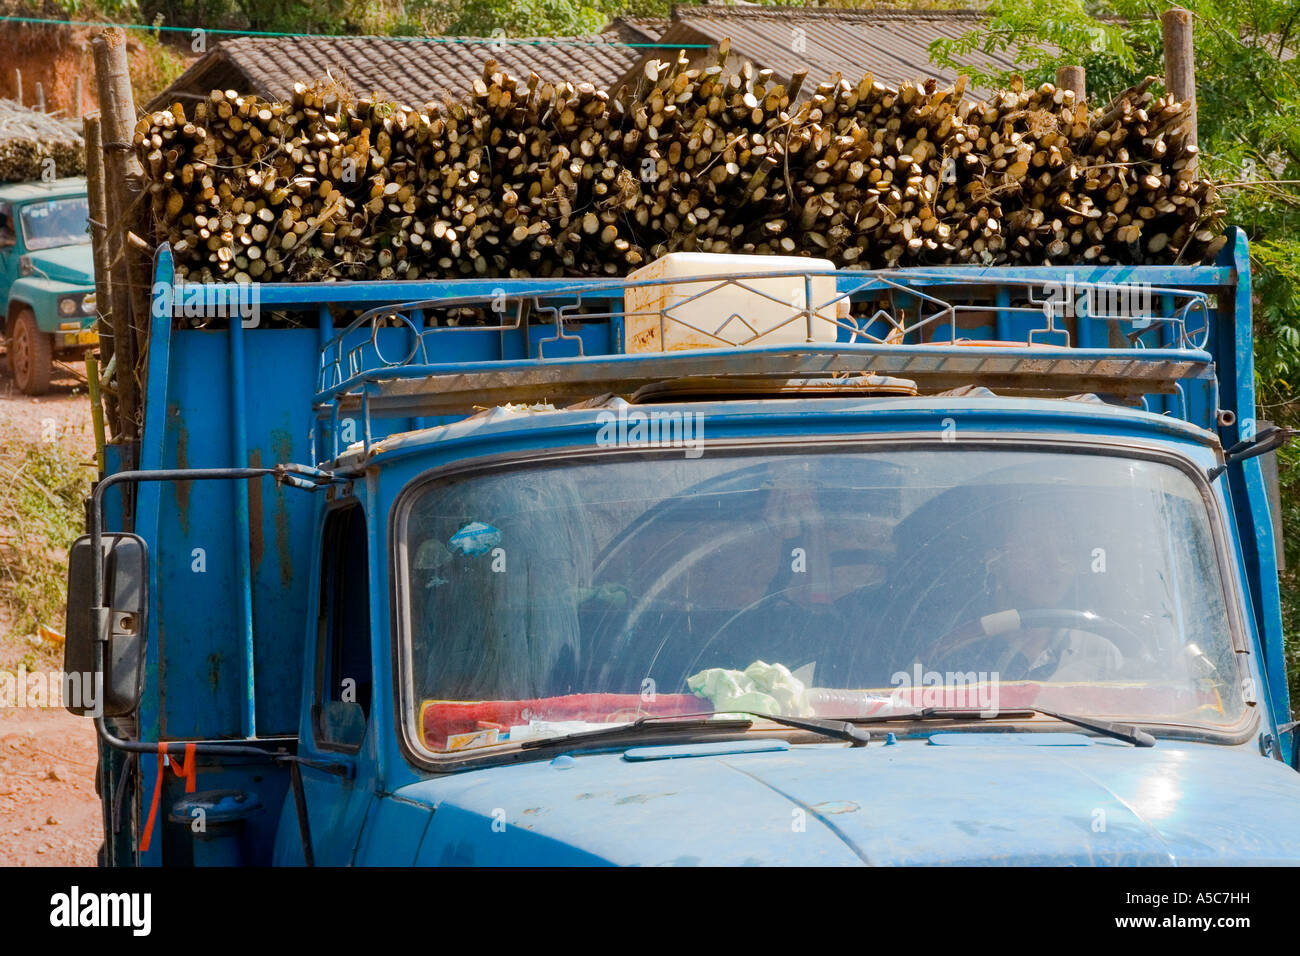 Truck Loaded with Sugarcane near Yaoqu Xishuangbanna China Stock Photo